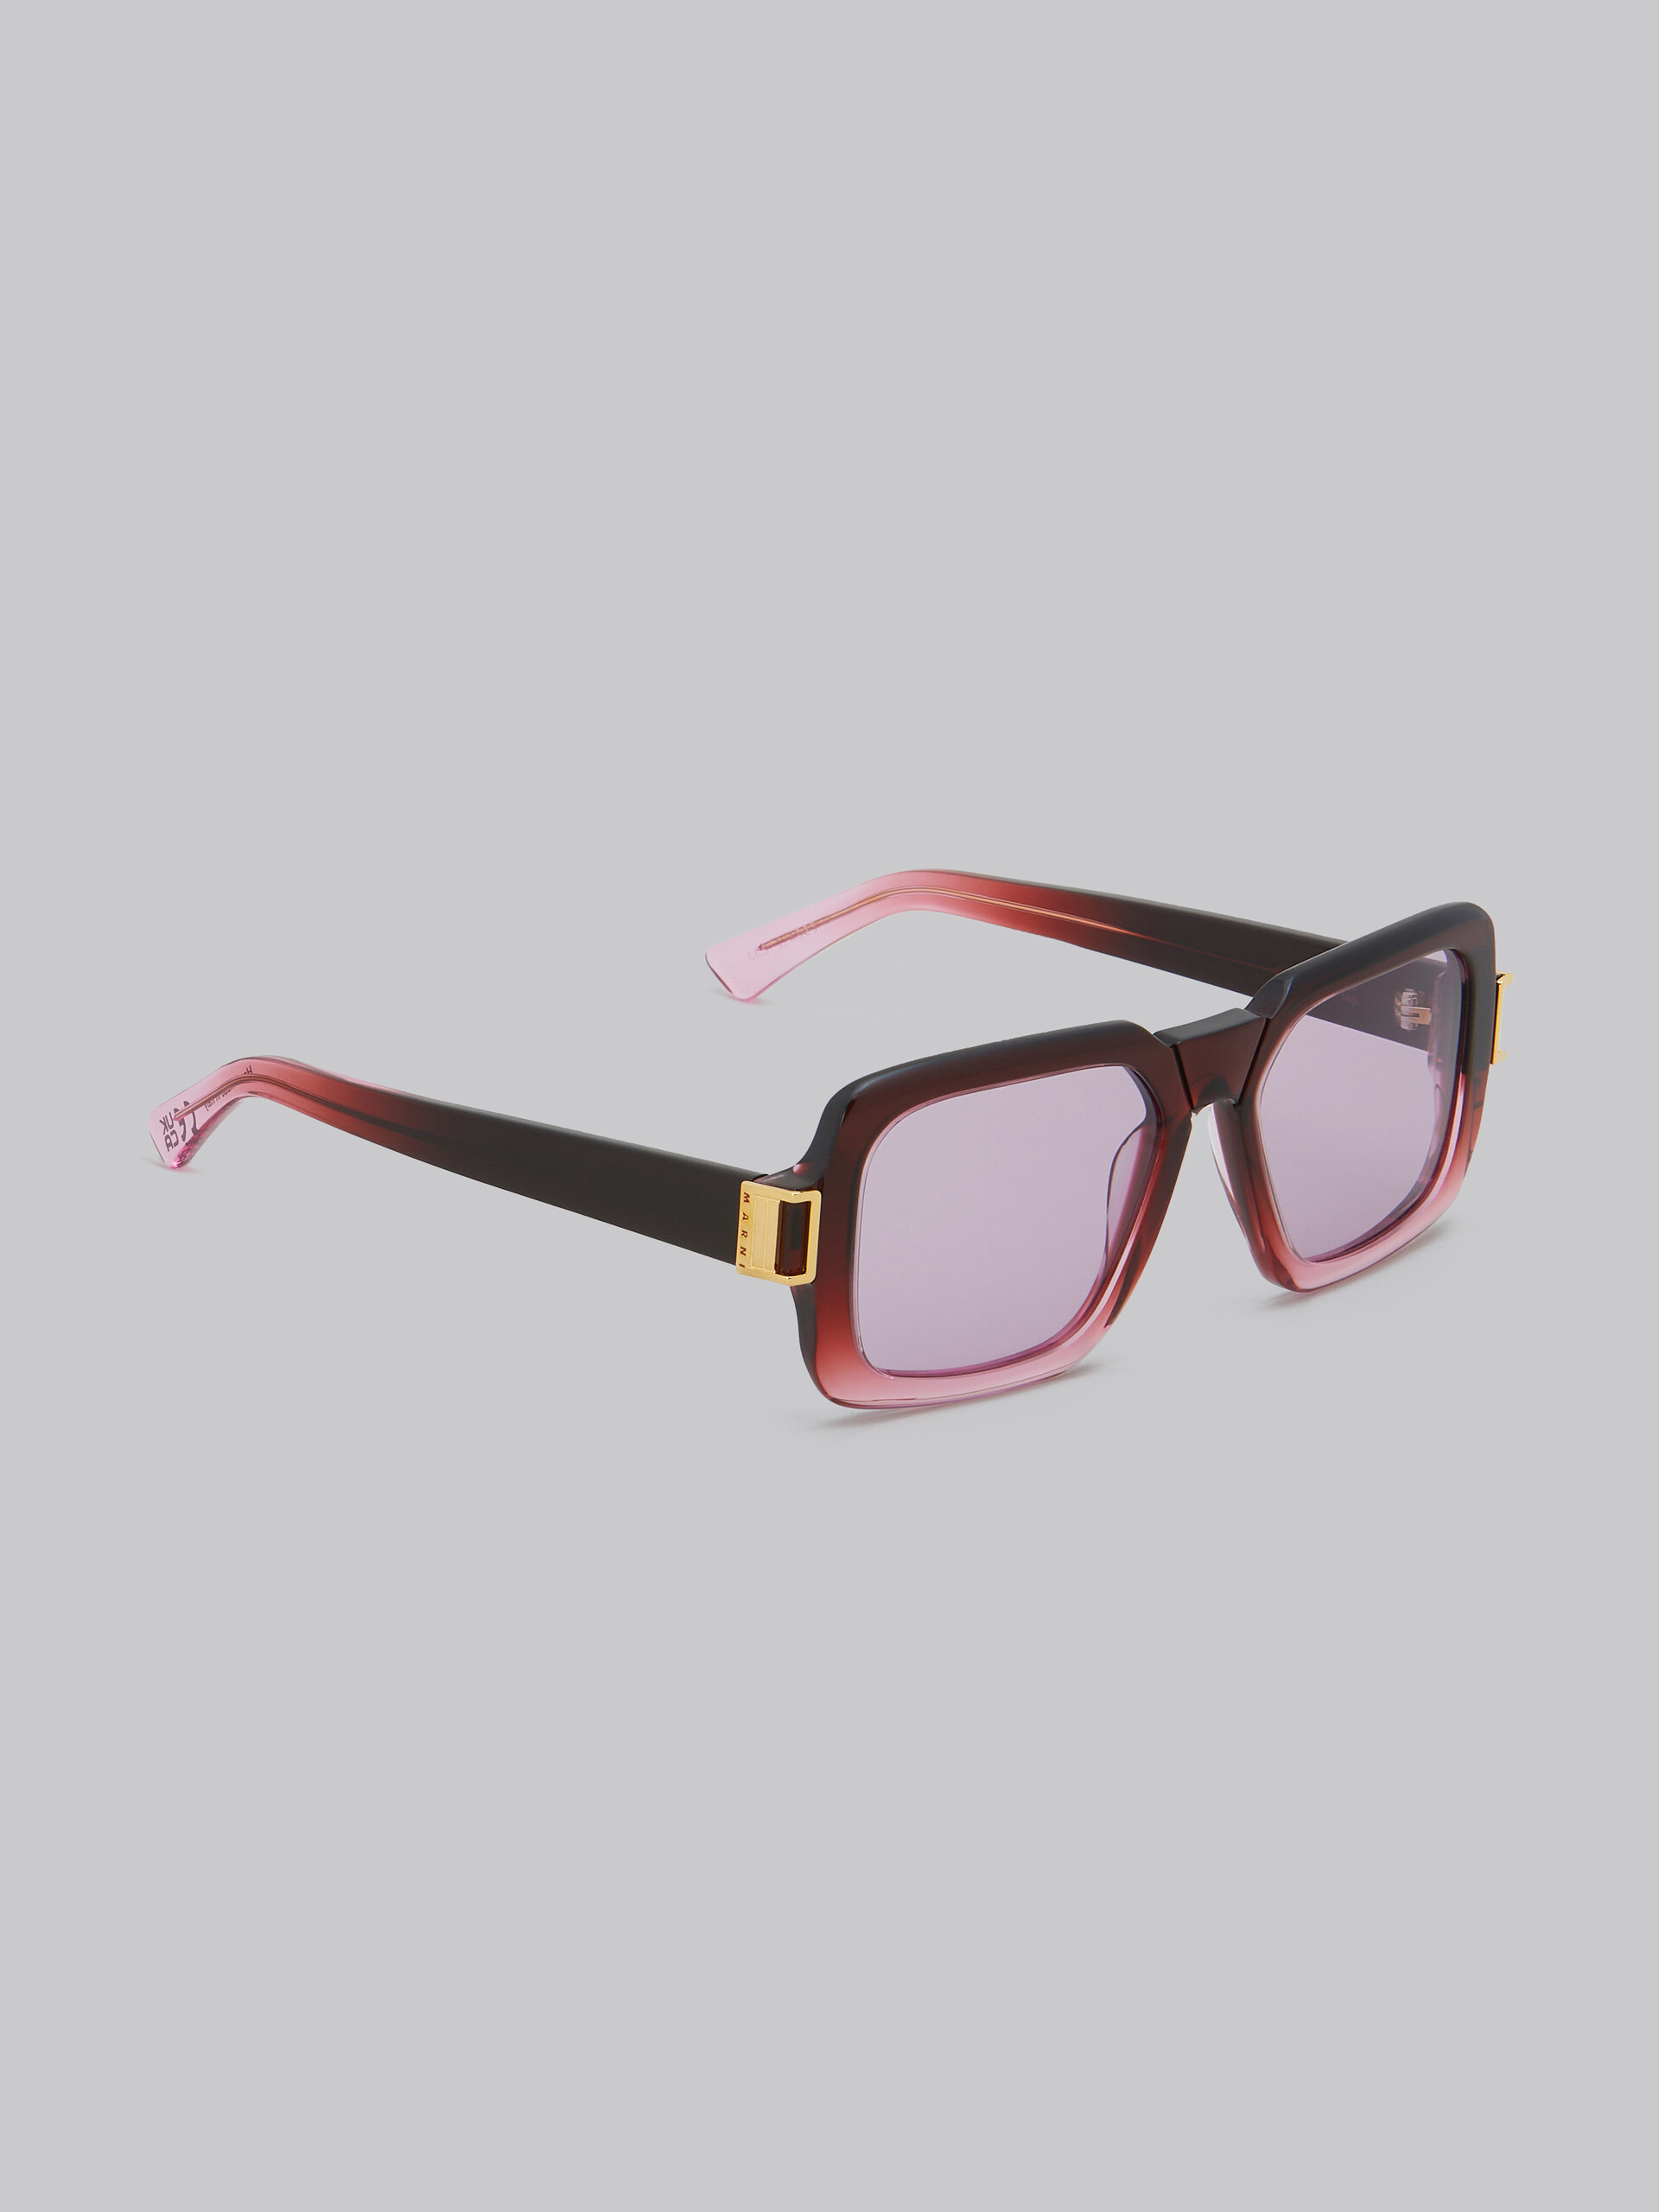 Black Zamalek sunglasses - Optical - Image 3